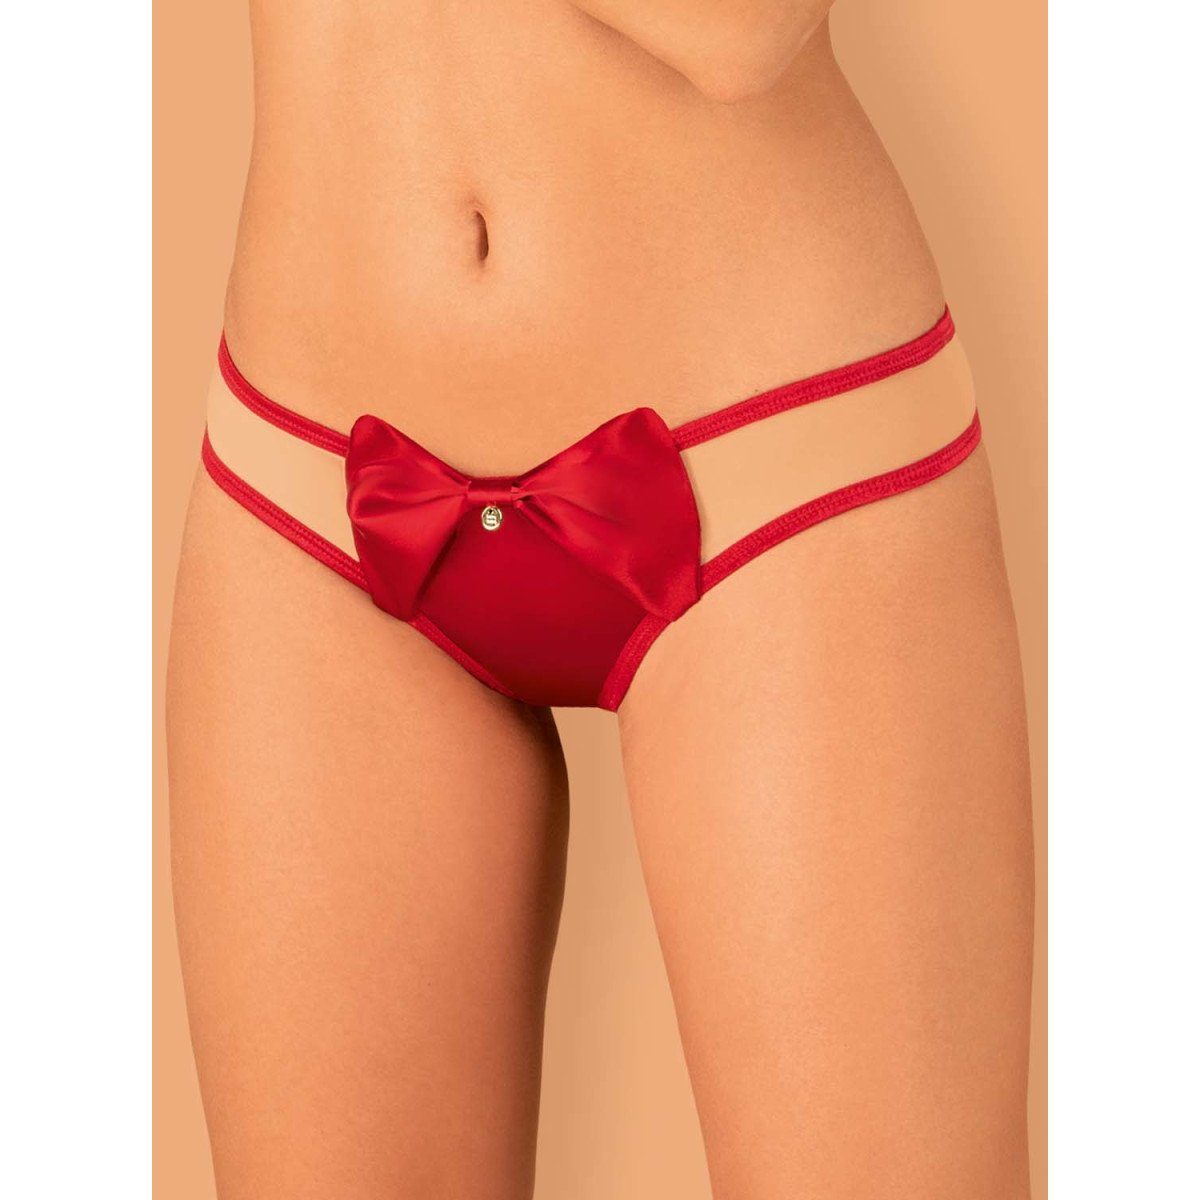 Rubinesa Panty (L/XL,S/M) red - thong Obsessive OB